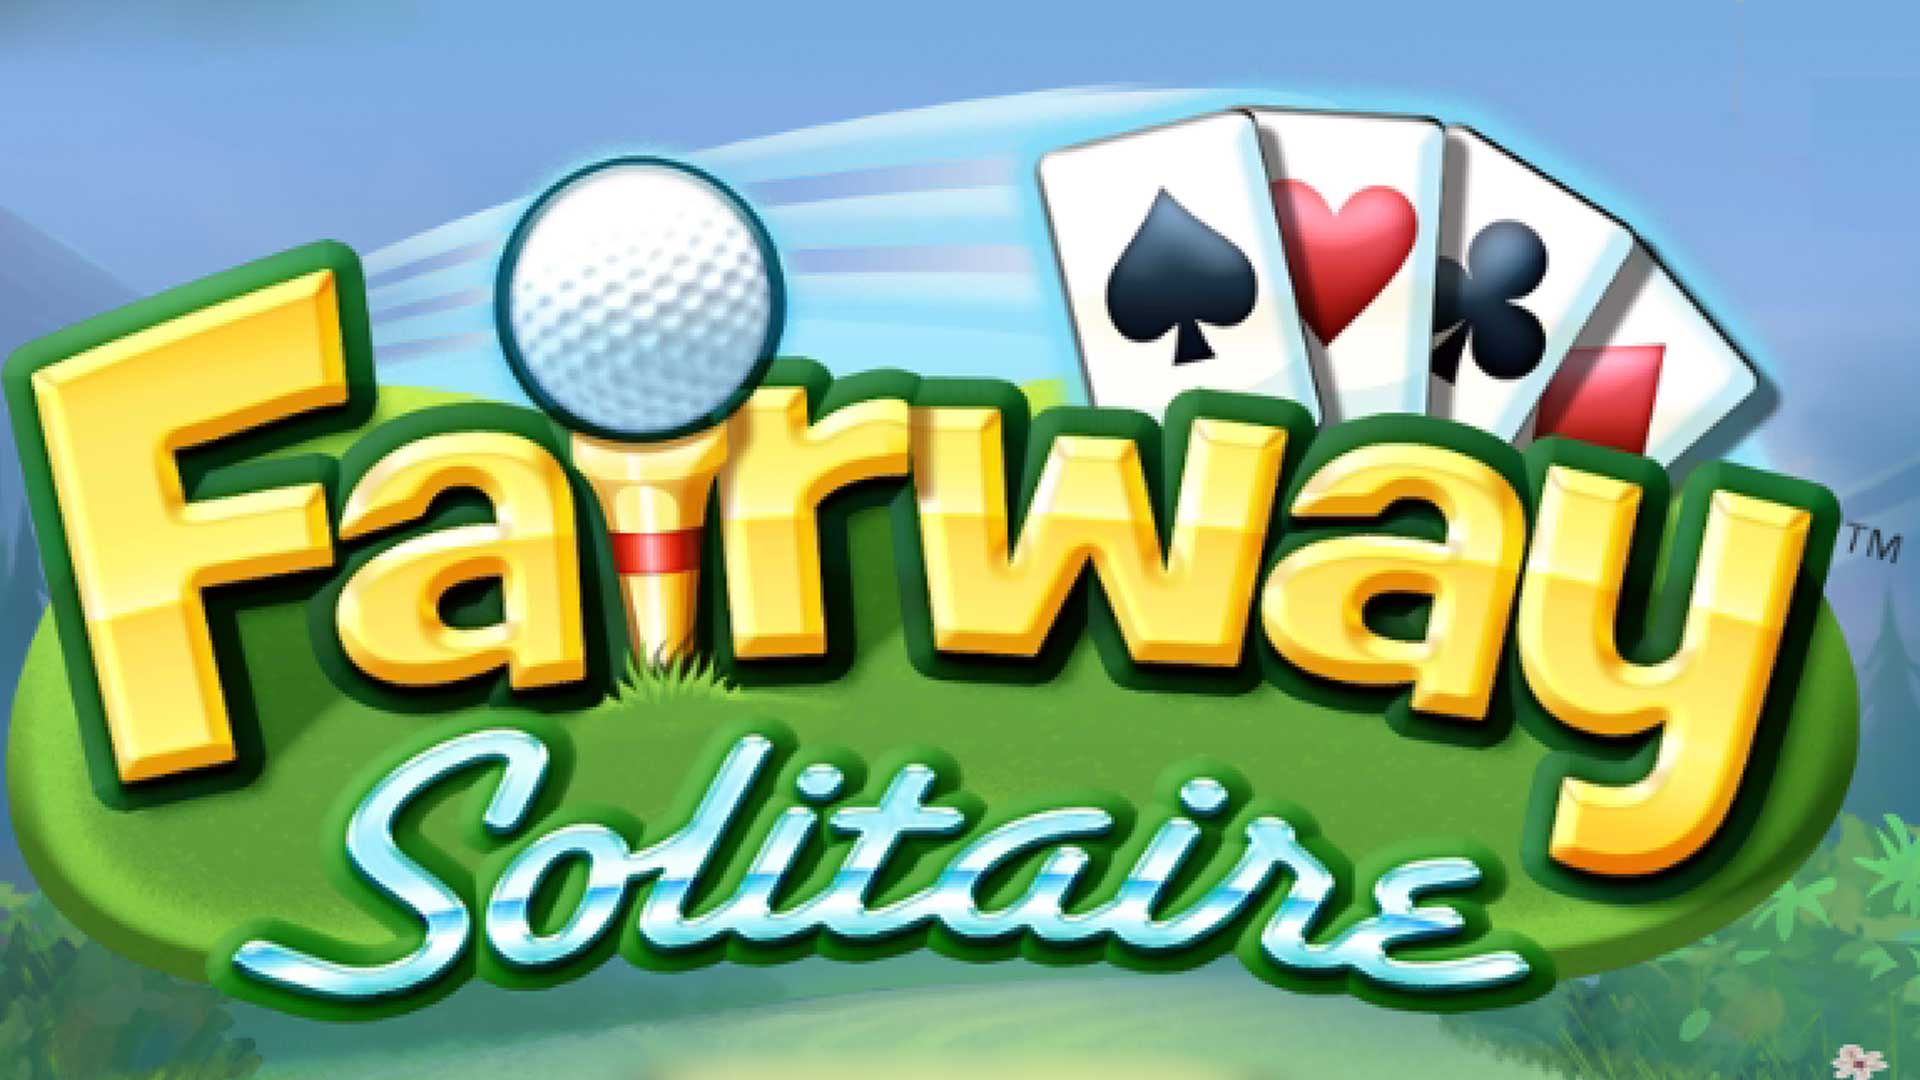 fairway golf solitaire